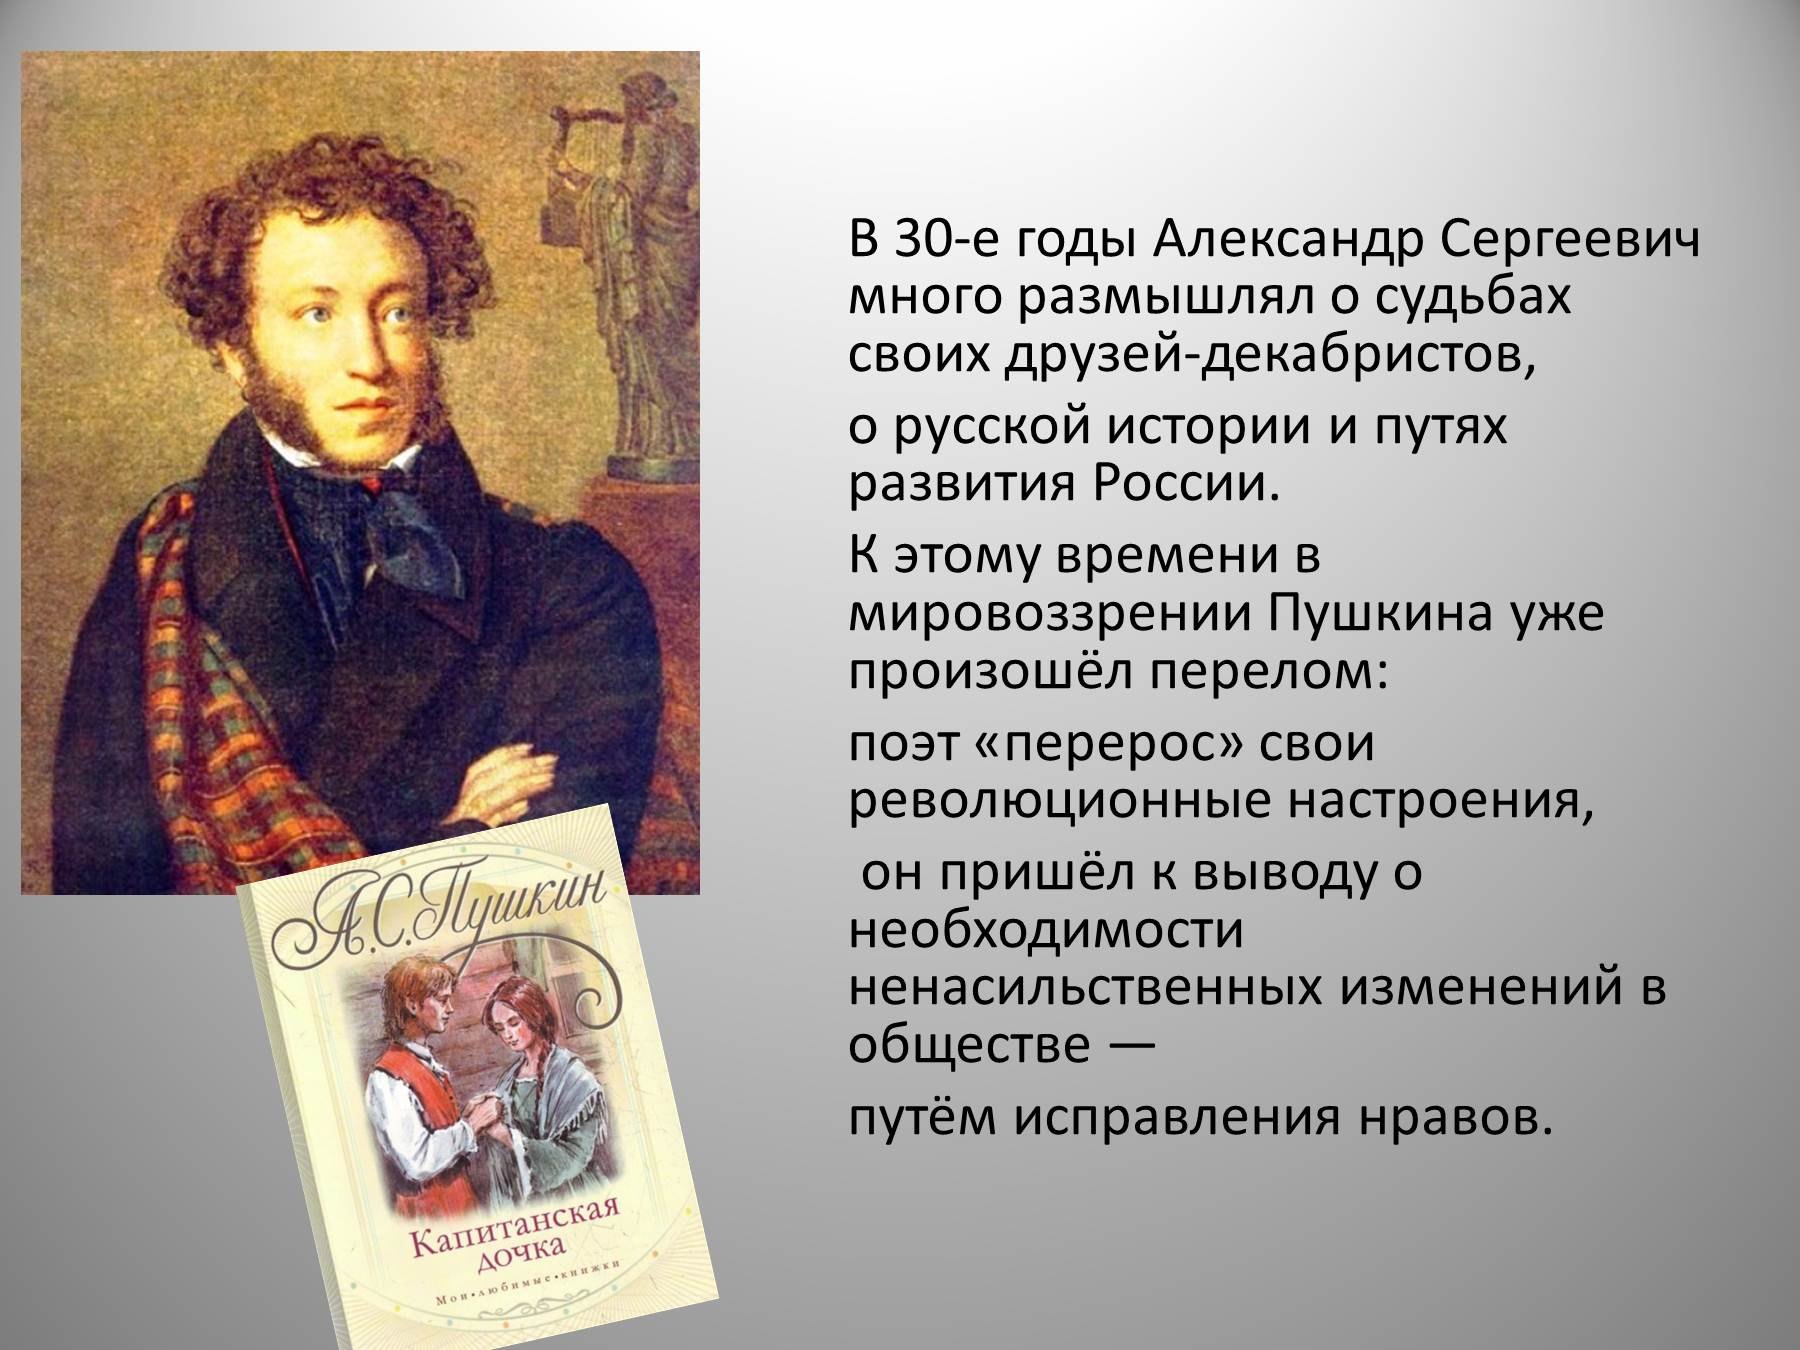 Произведения Пушкина о декабристах